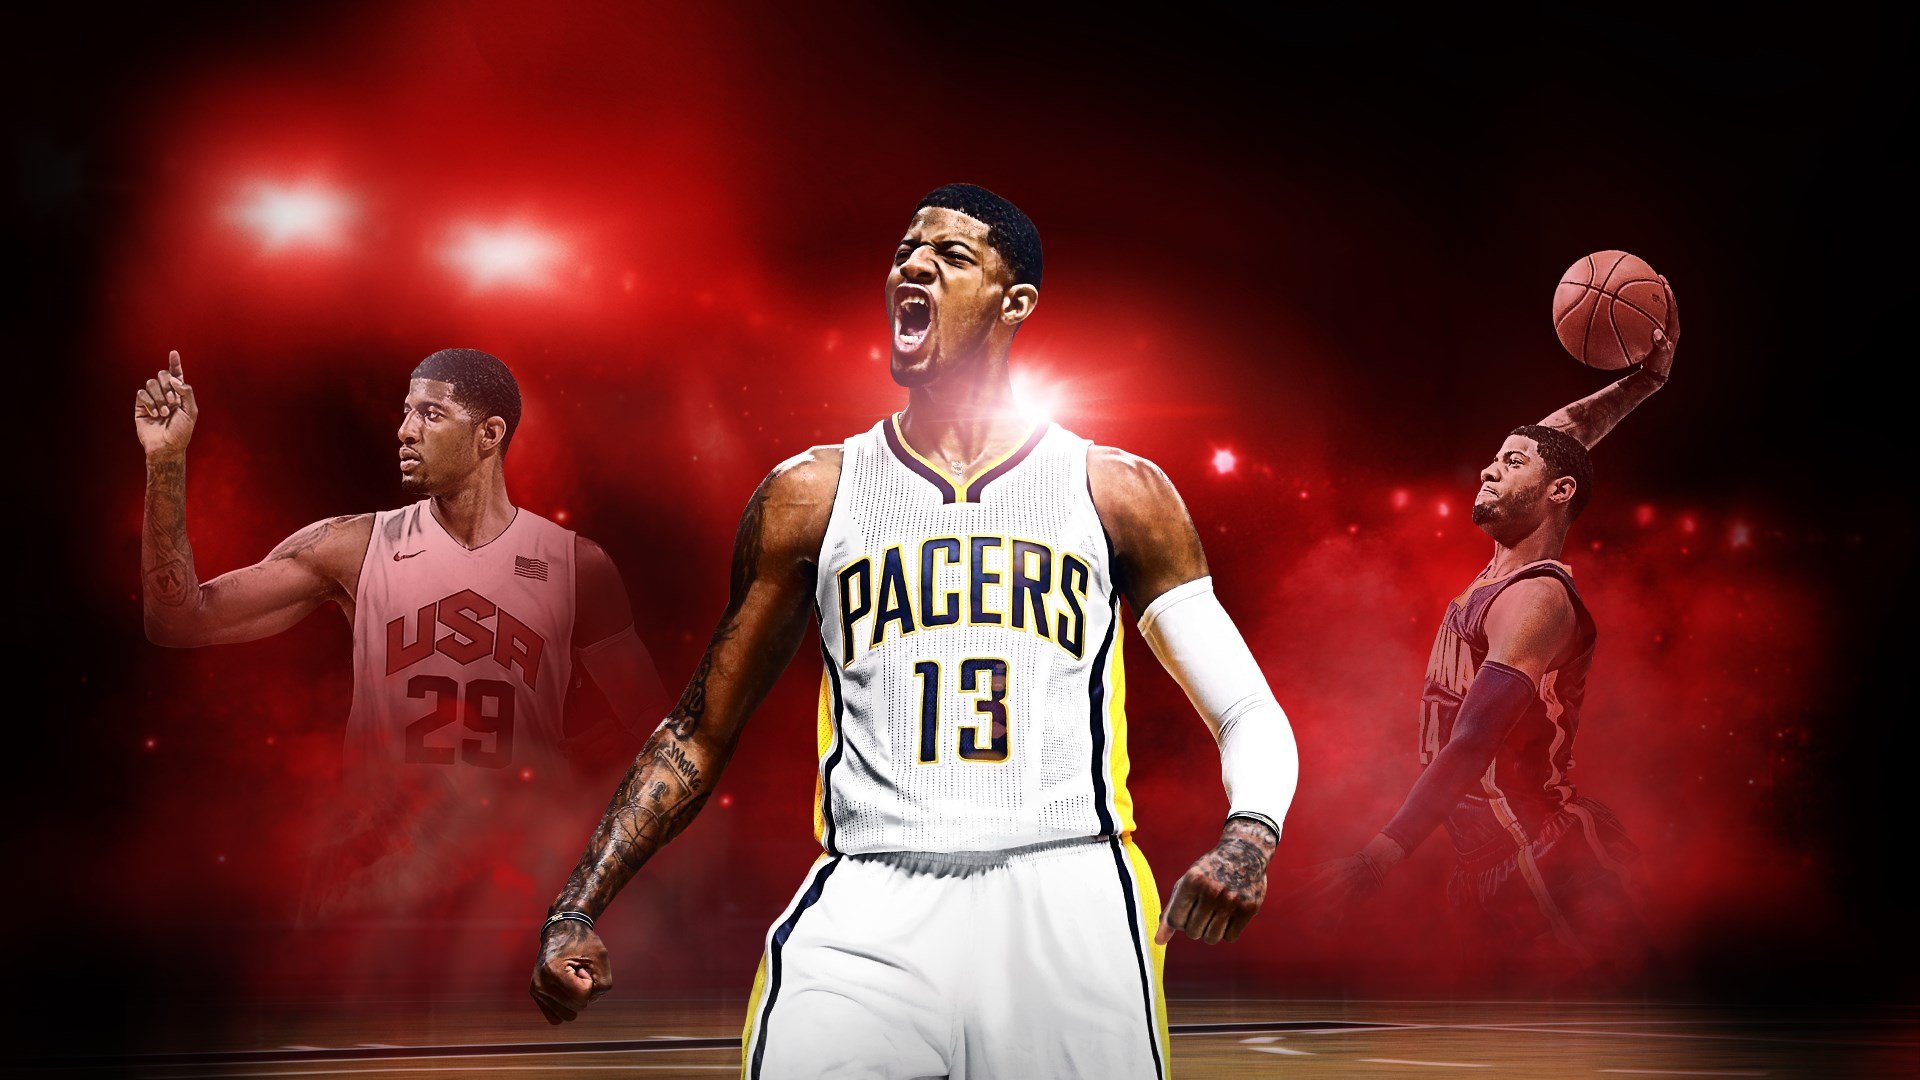 NBA 2K17 cover image